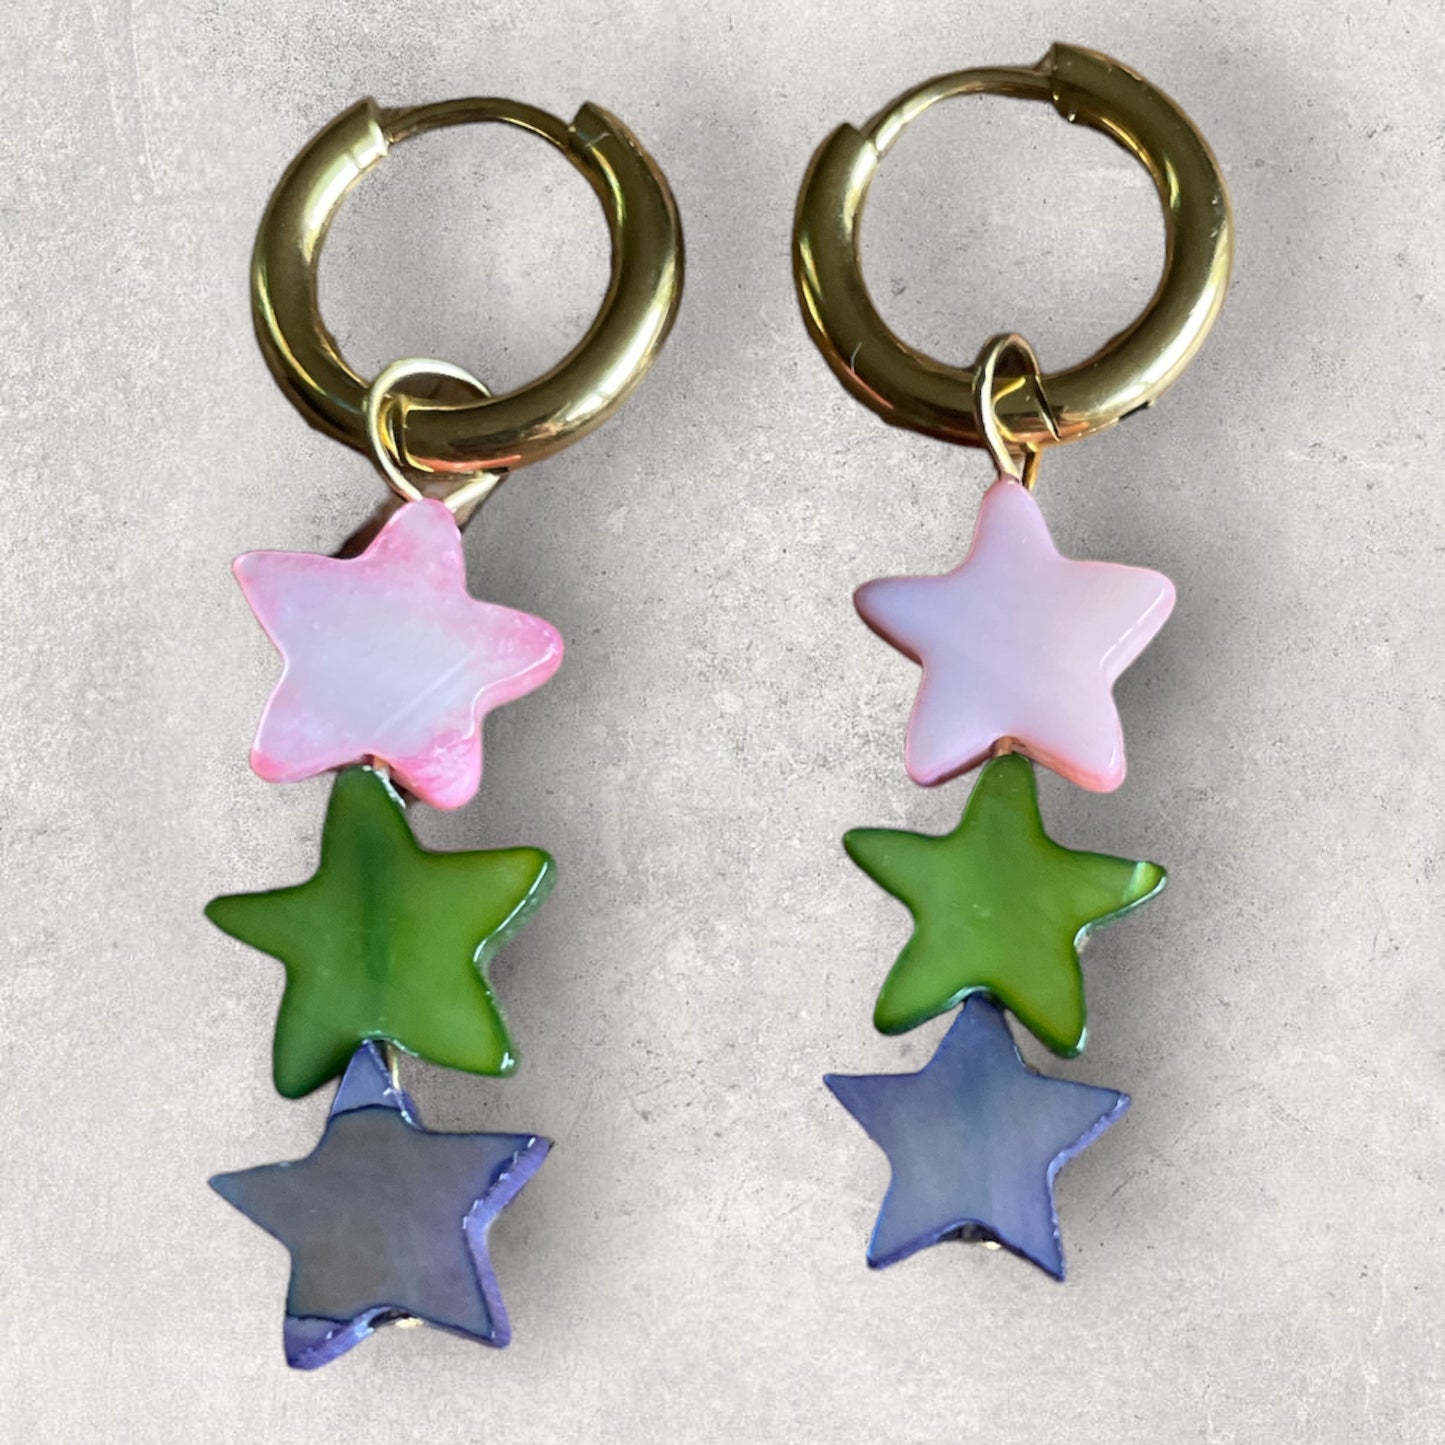 'COLOURFUL STARS' earrings